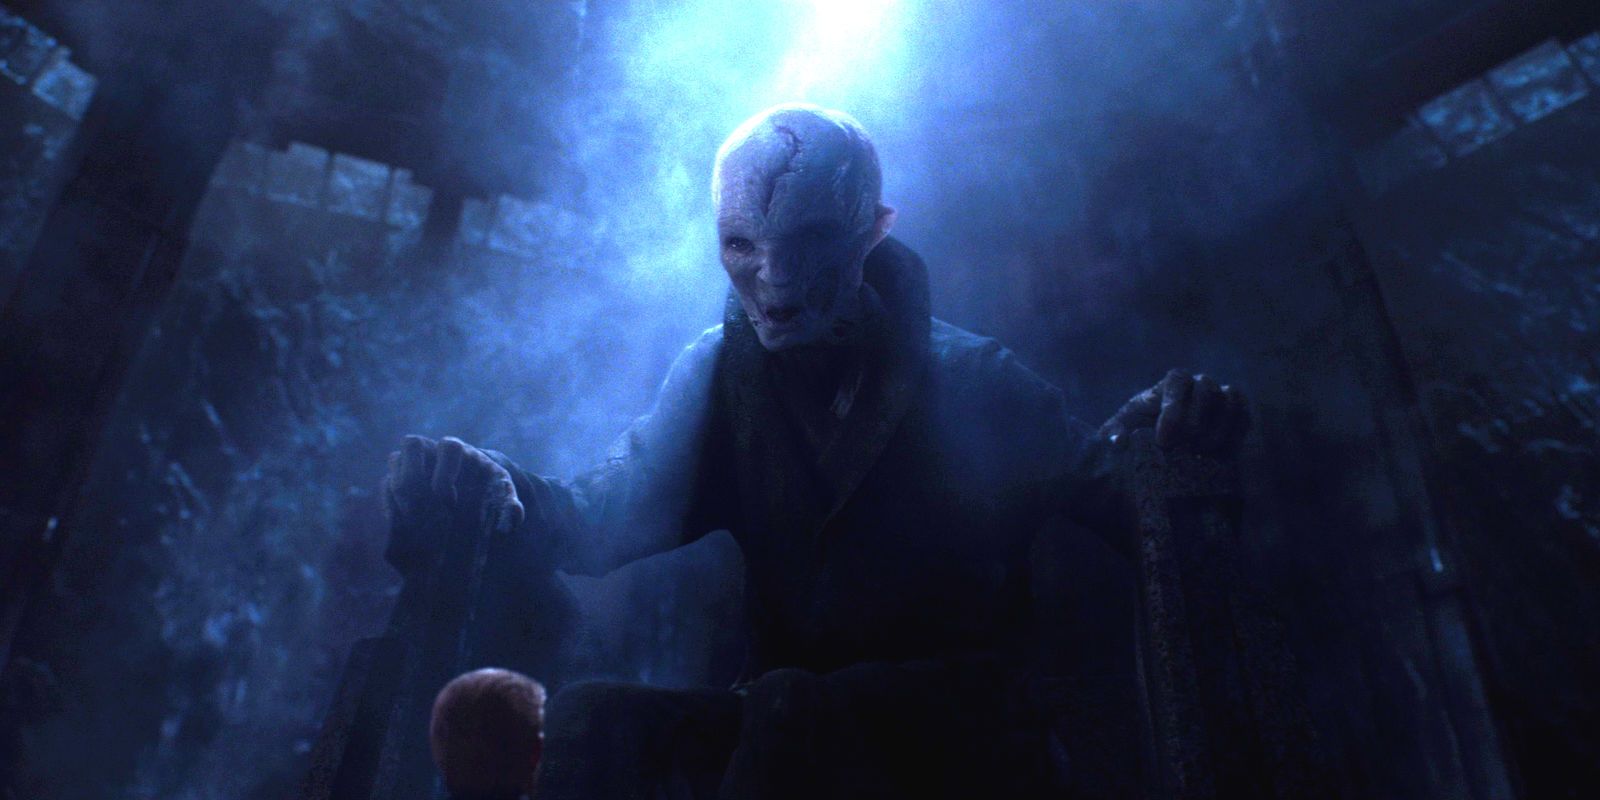 Hologram Snoke in Star Wars The Force Awakens